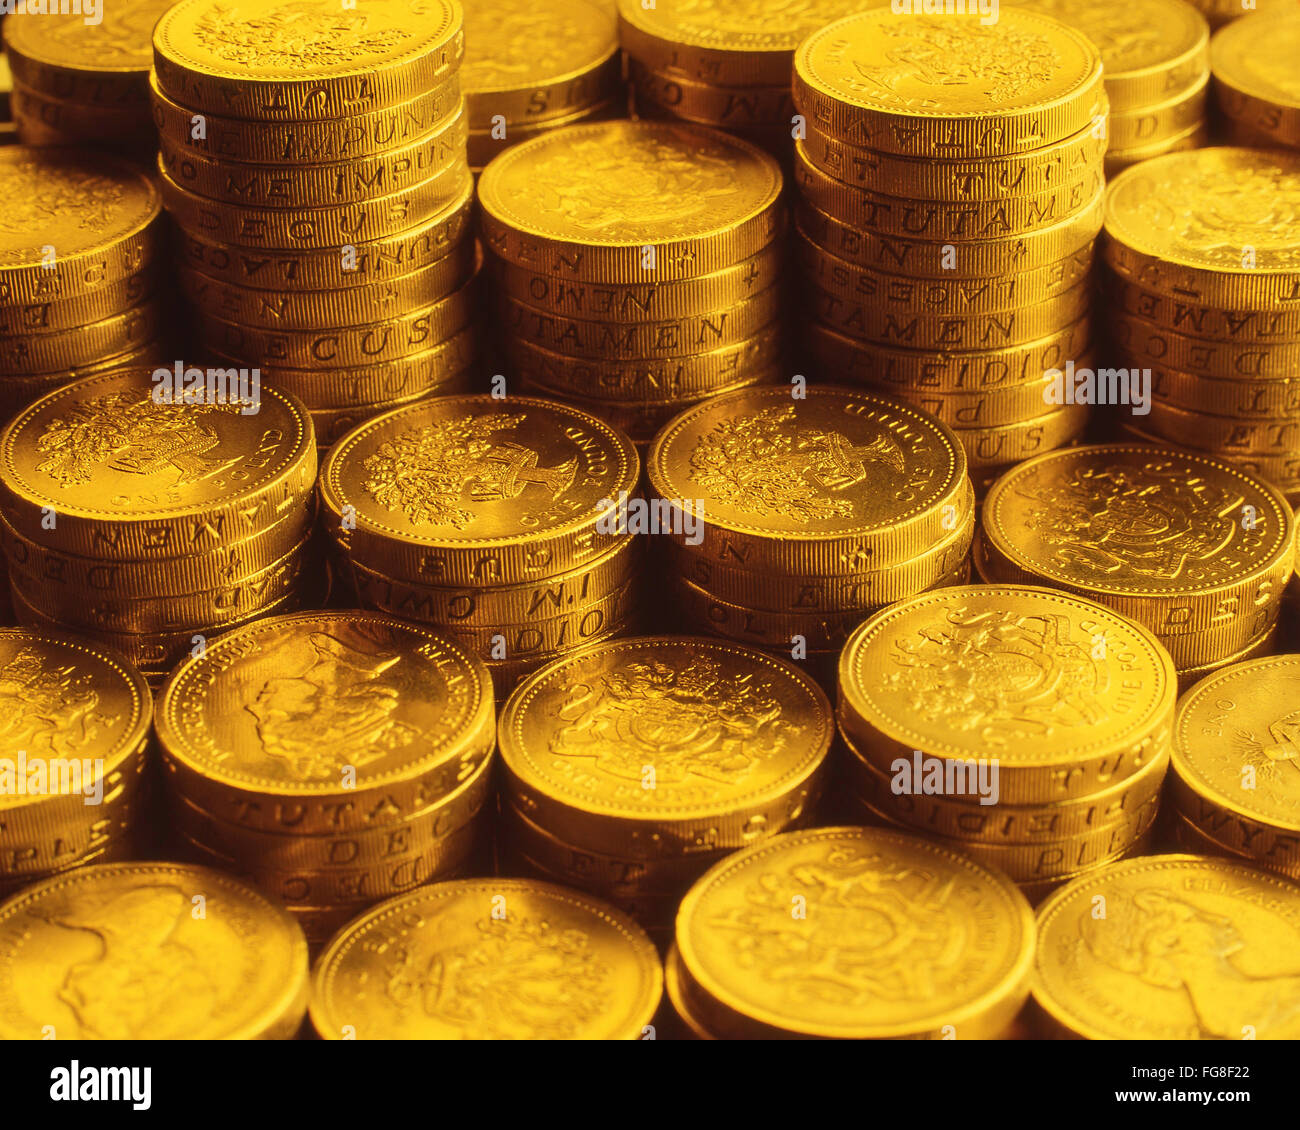 Rows of British pound coins, London, England, United Kingdom Stock Photo